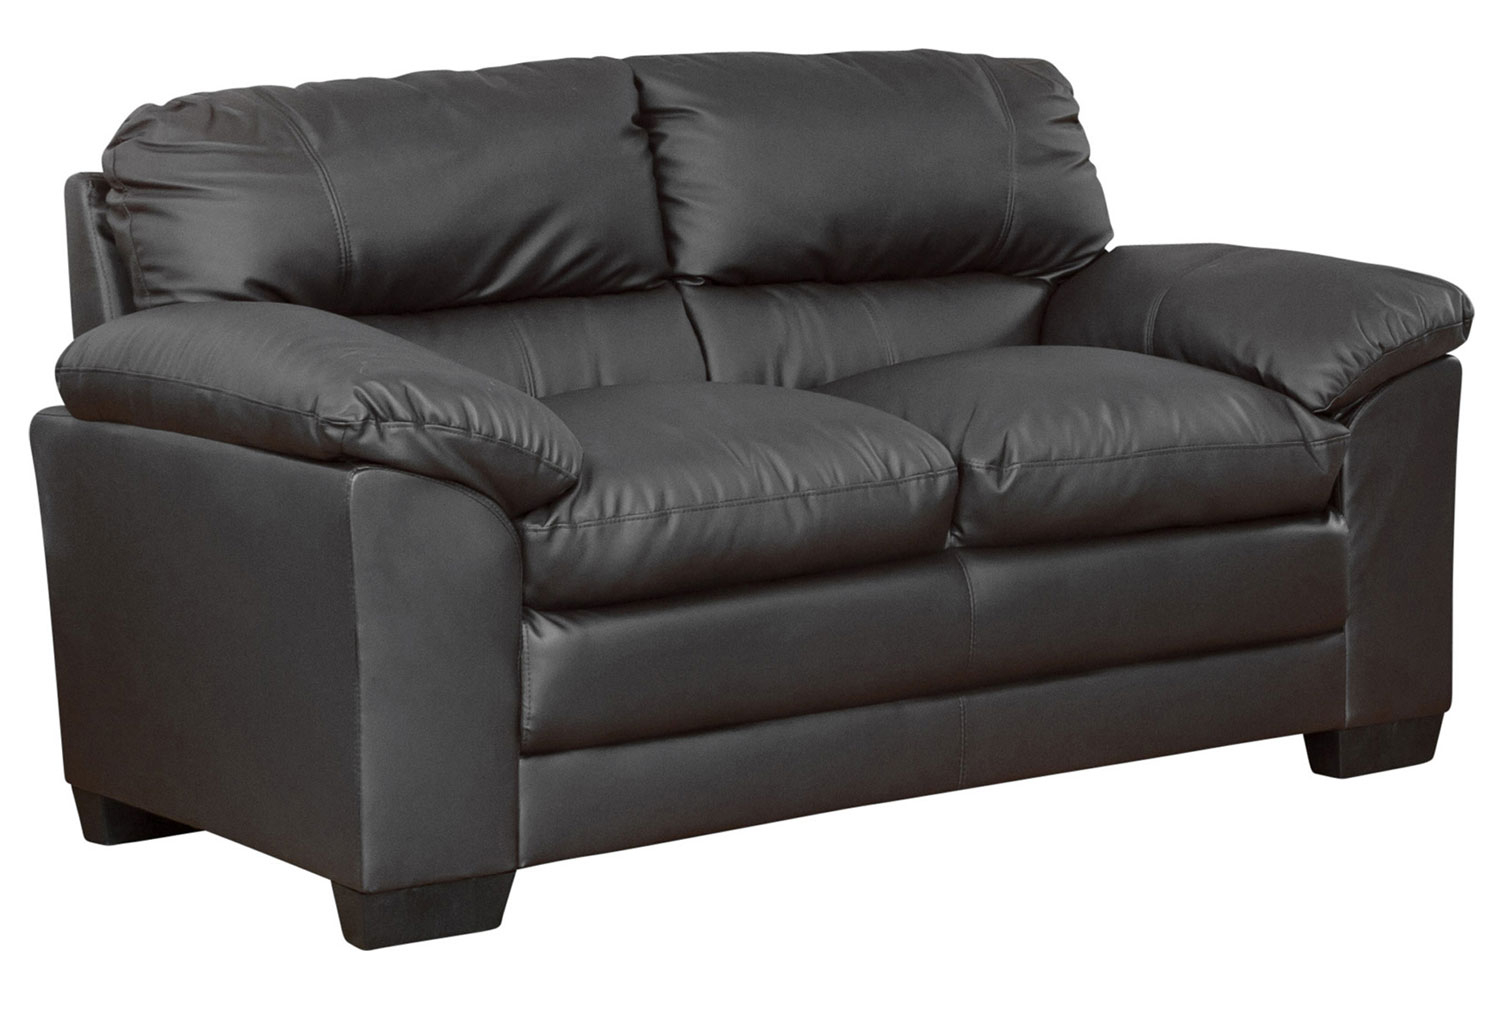 Edmund Leather 2 Seater Sofa, Grey